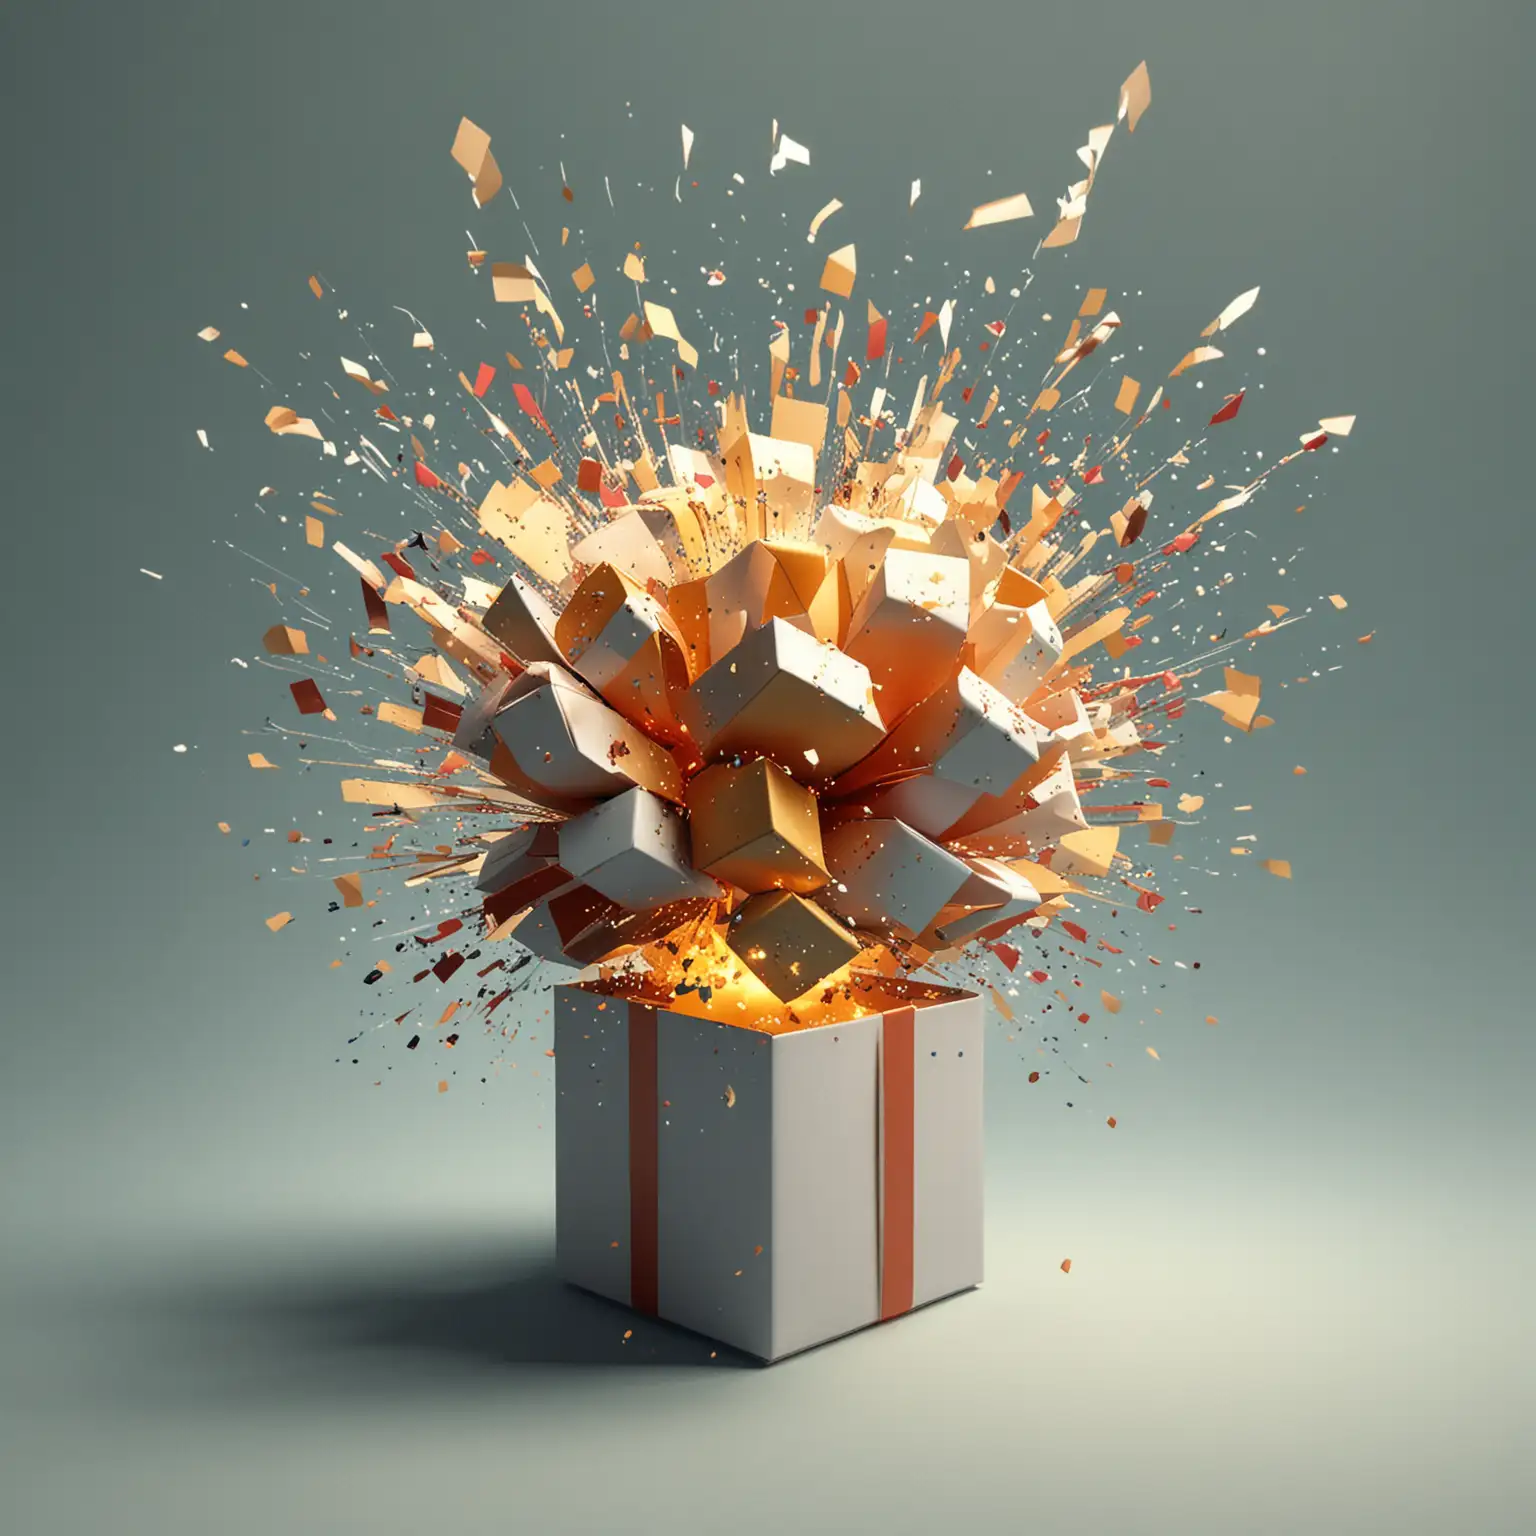 Surprise Gift Box Exploding with Joyful Confetti